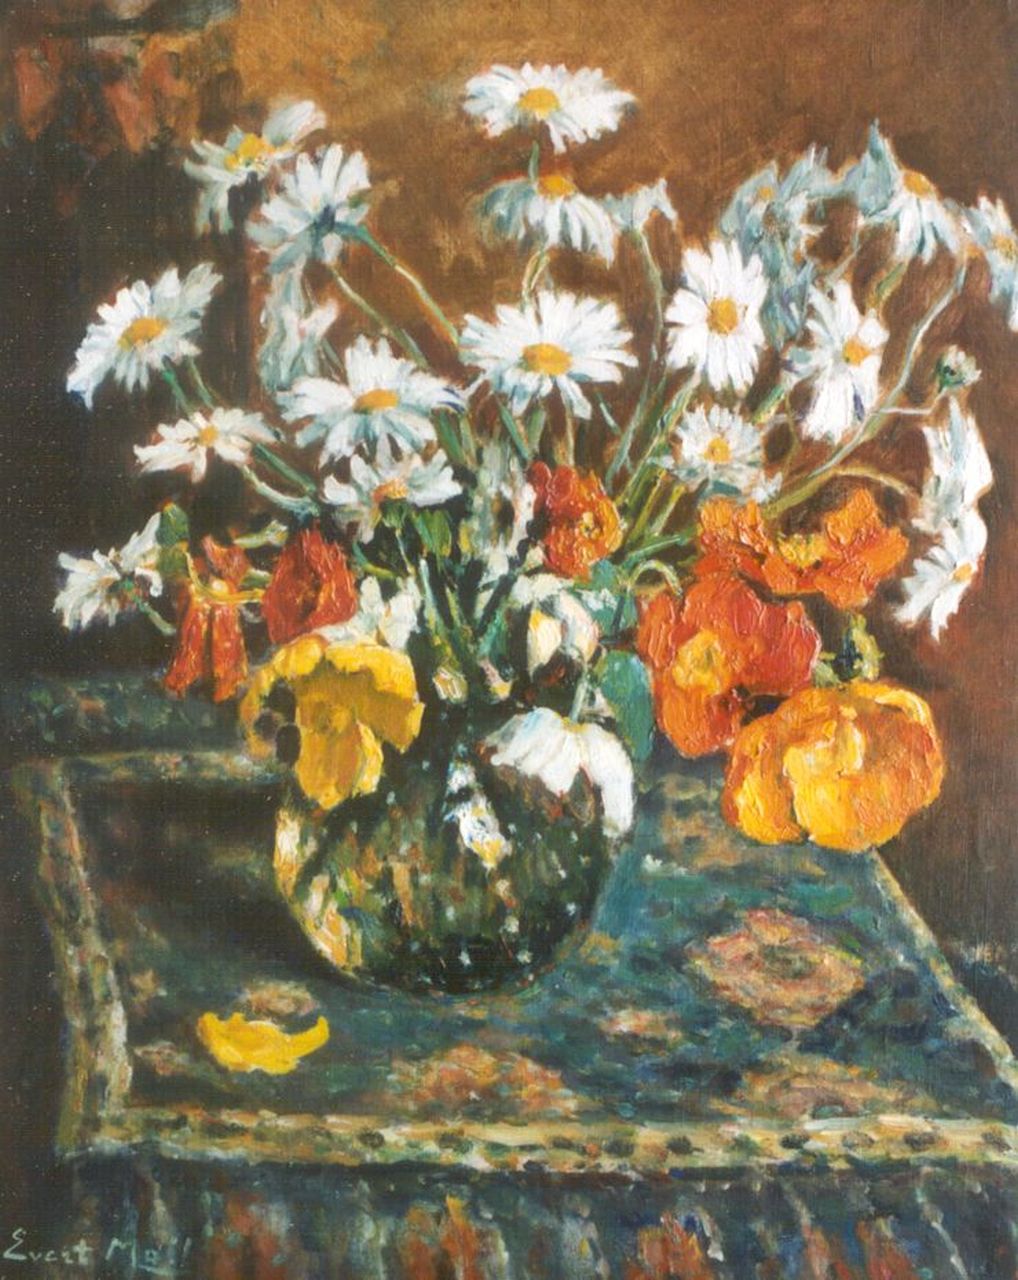 Moll E.  | Evert Moll, Daisies and tulips, Öl auf Leinwand 70,0 x 59,8 cm, signed l.l.